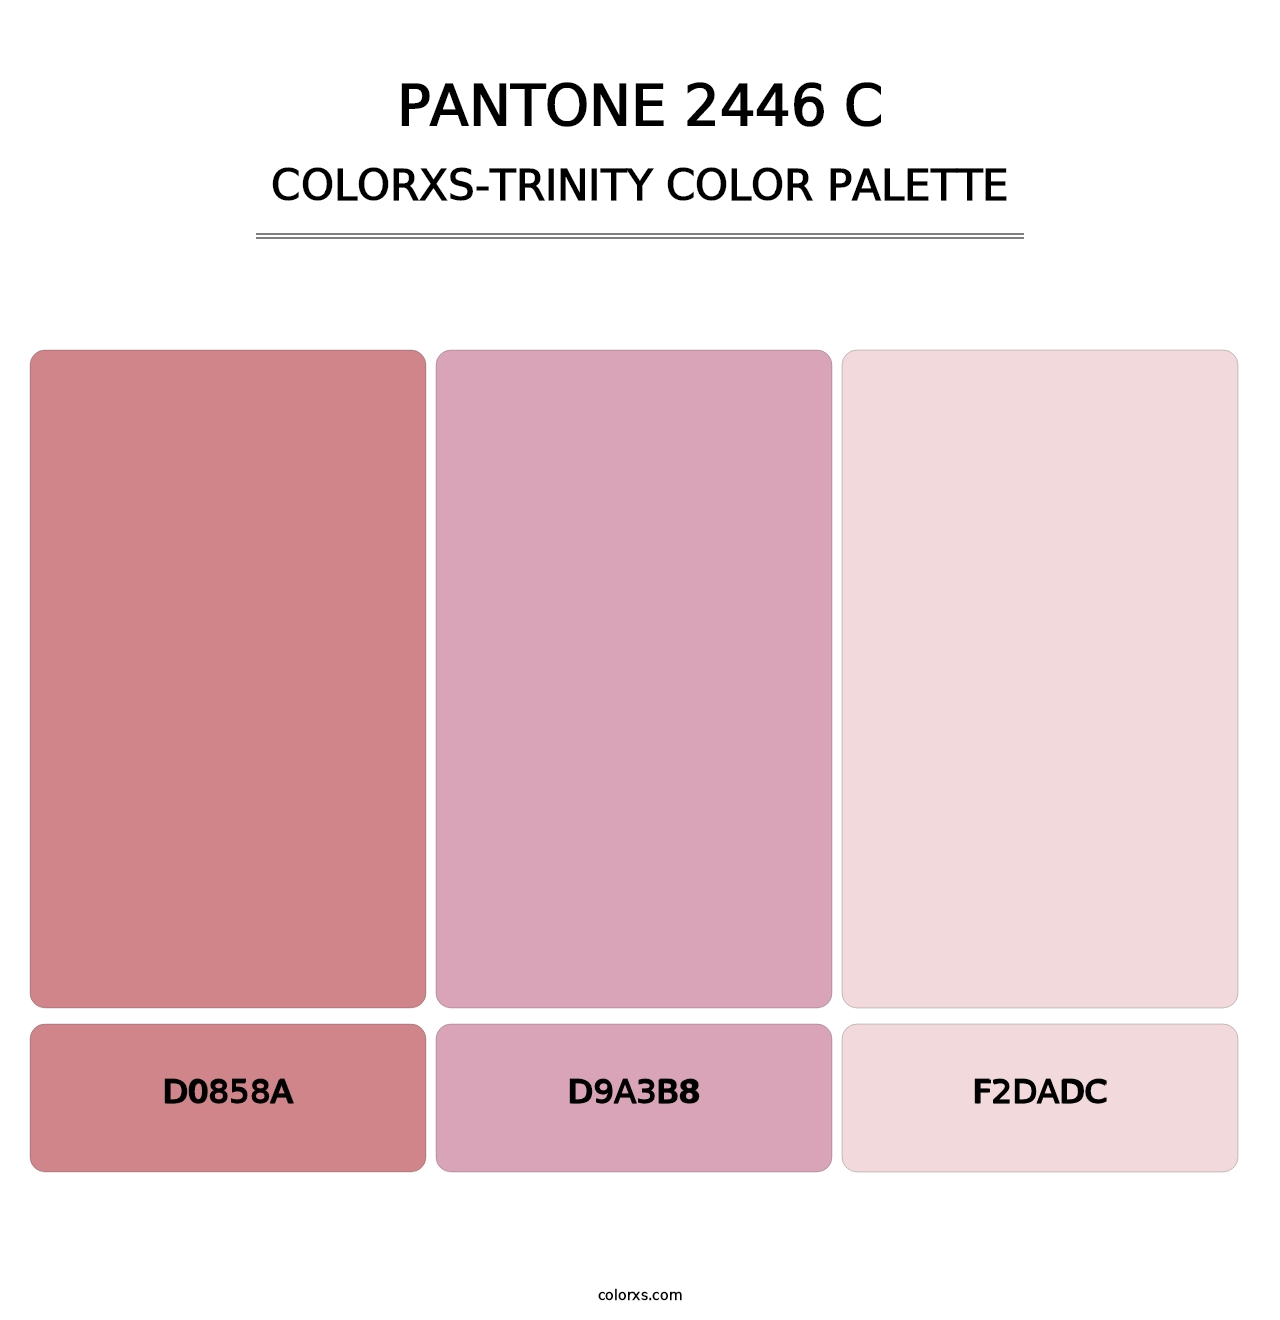 PANTONE 2446 C - Colorxs Trinity Palette